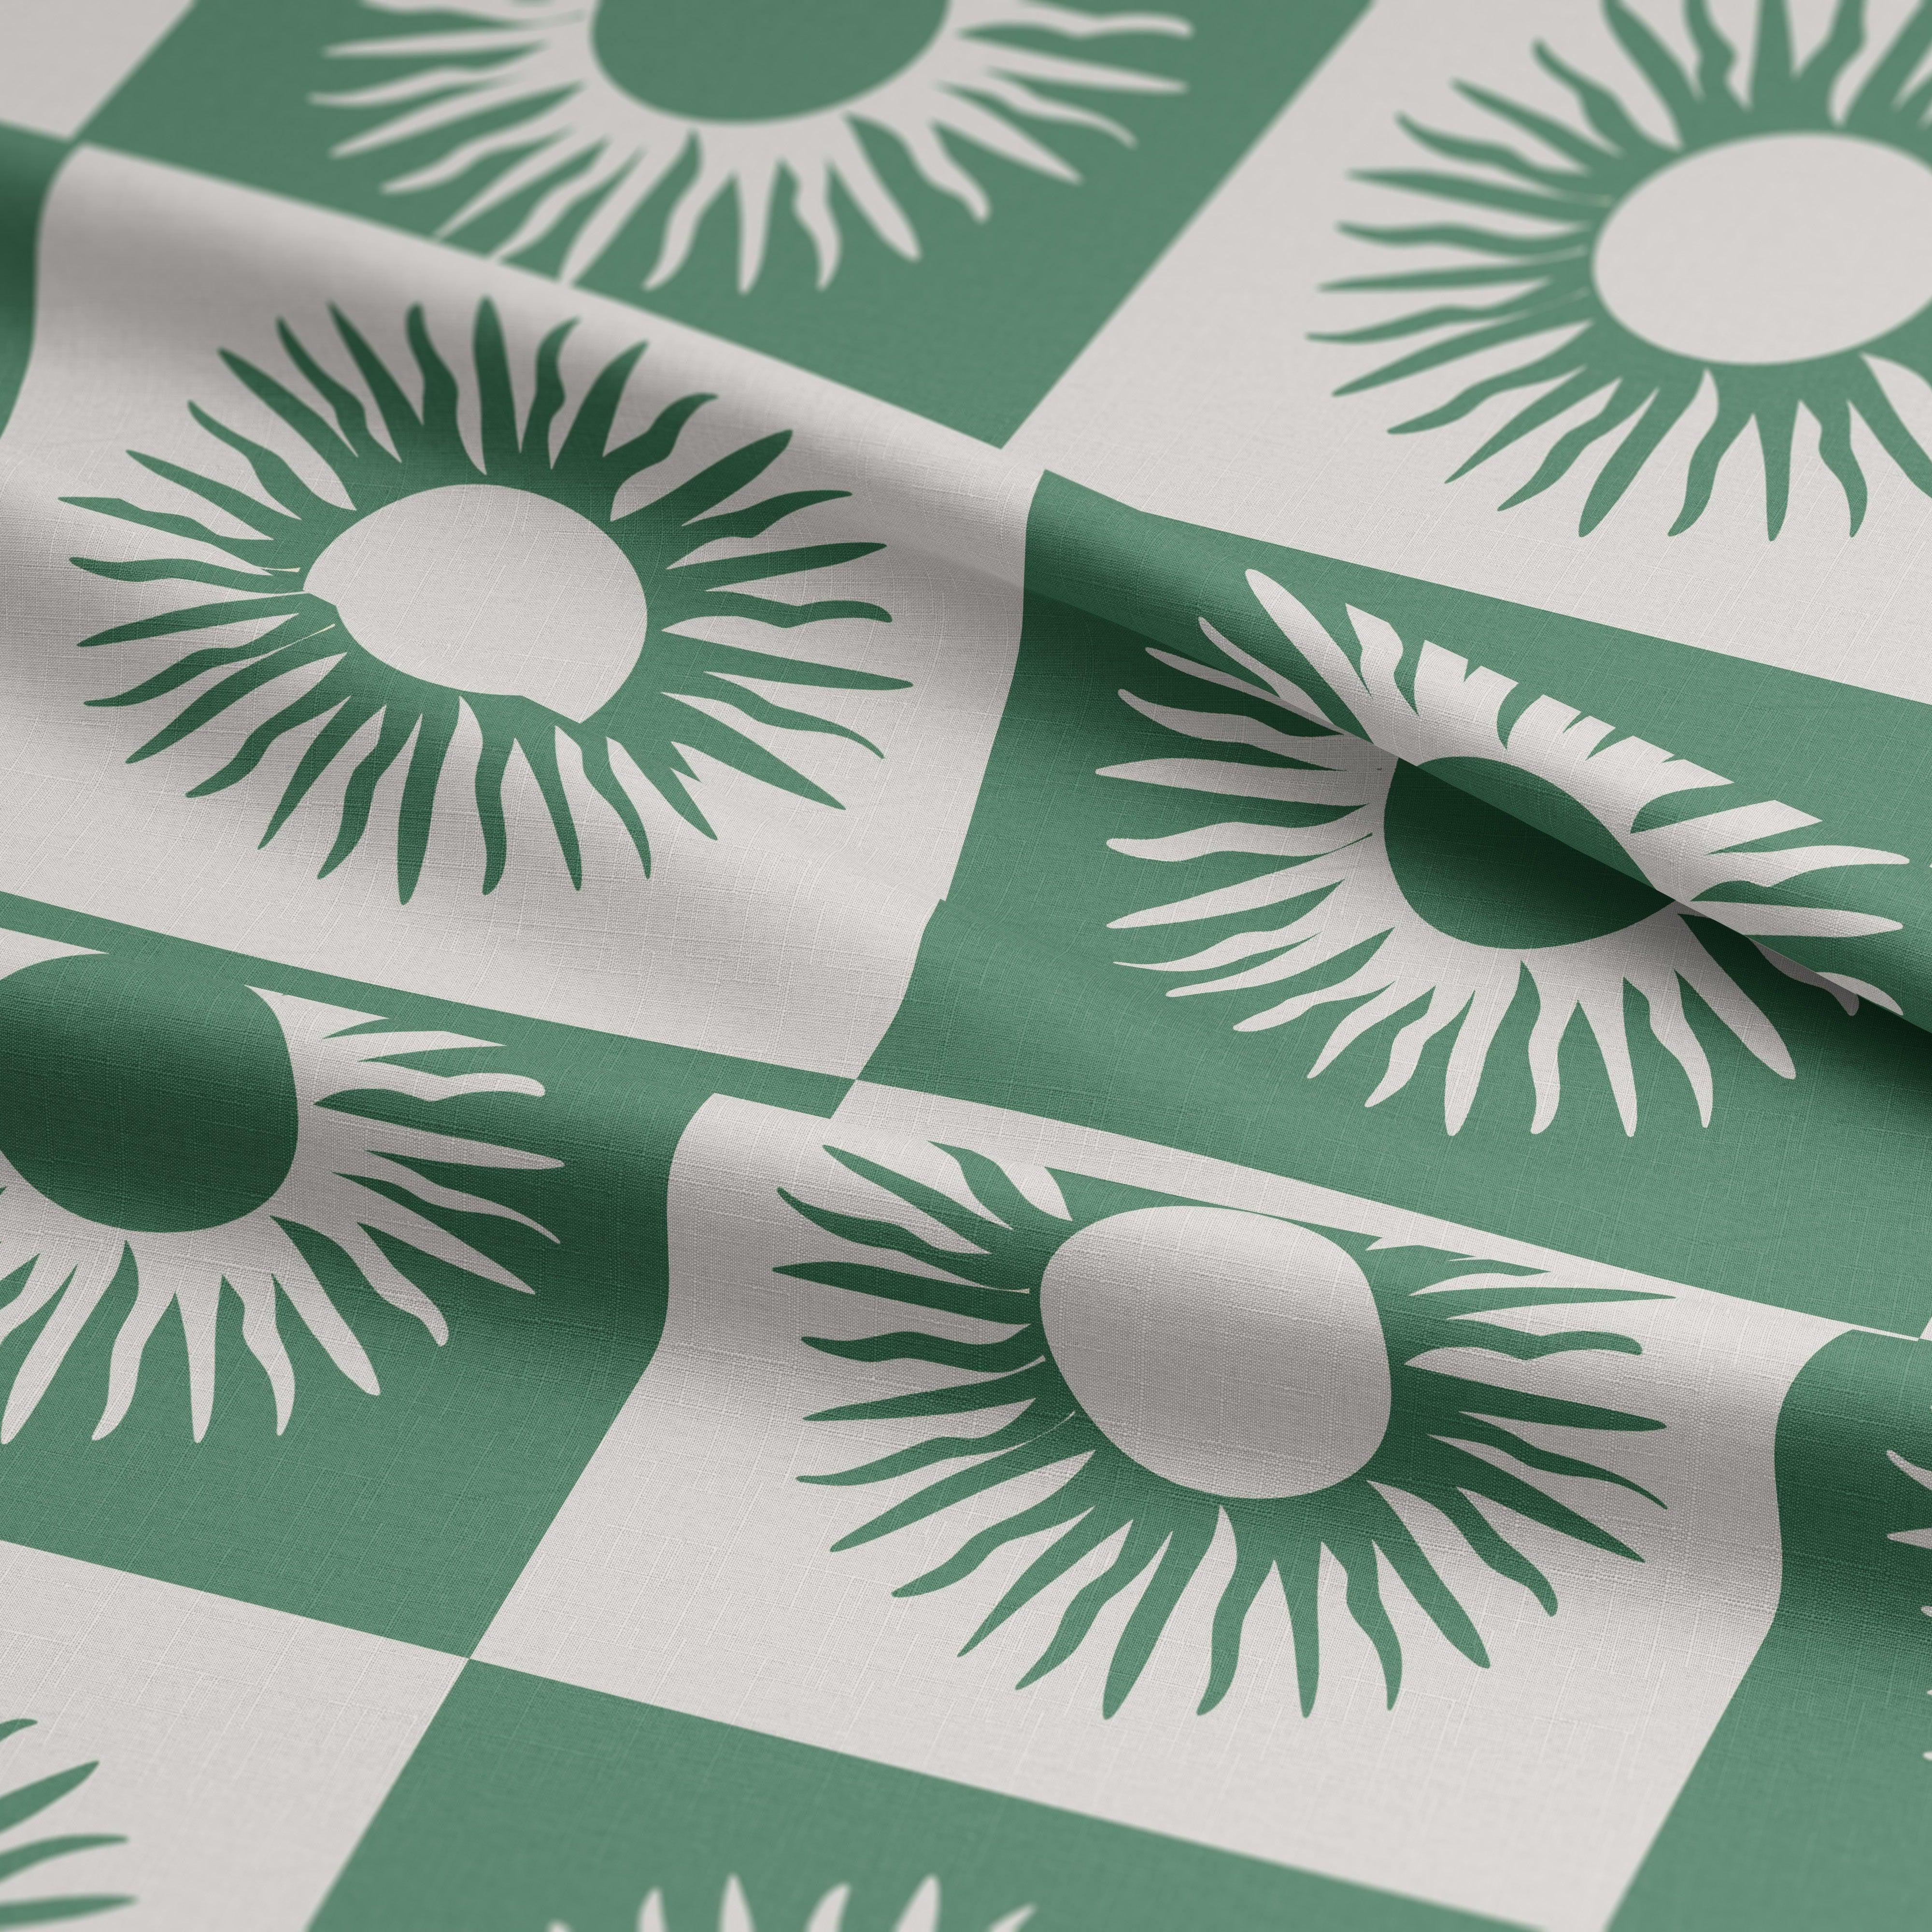 Patchwork Suns-Art Print Fabric-Melco Fabrics-Dark Green and Mint-Cotton Poplin (110gsm)-Online-Fabric-Shop-Australia